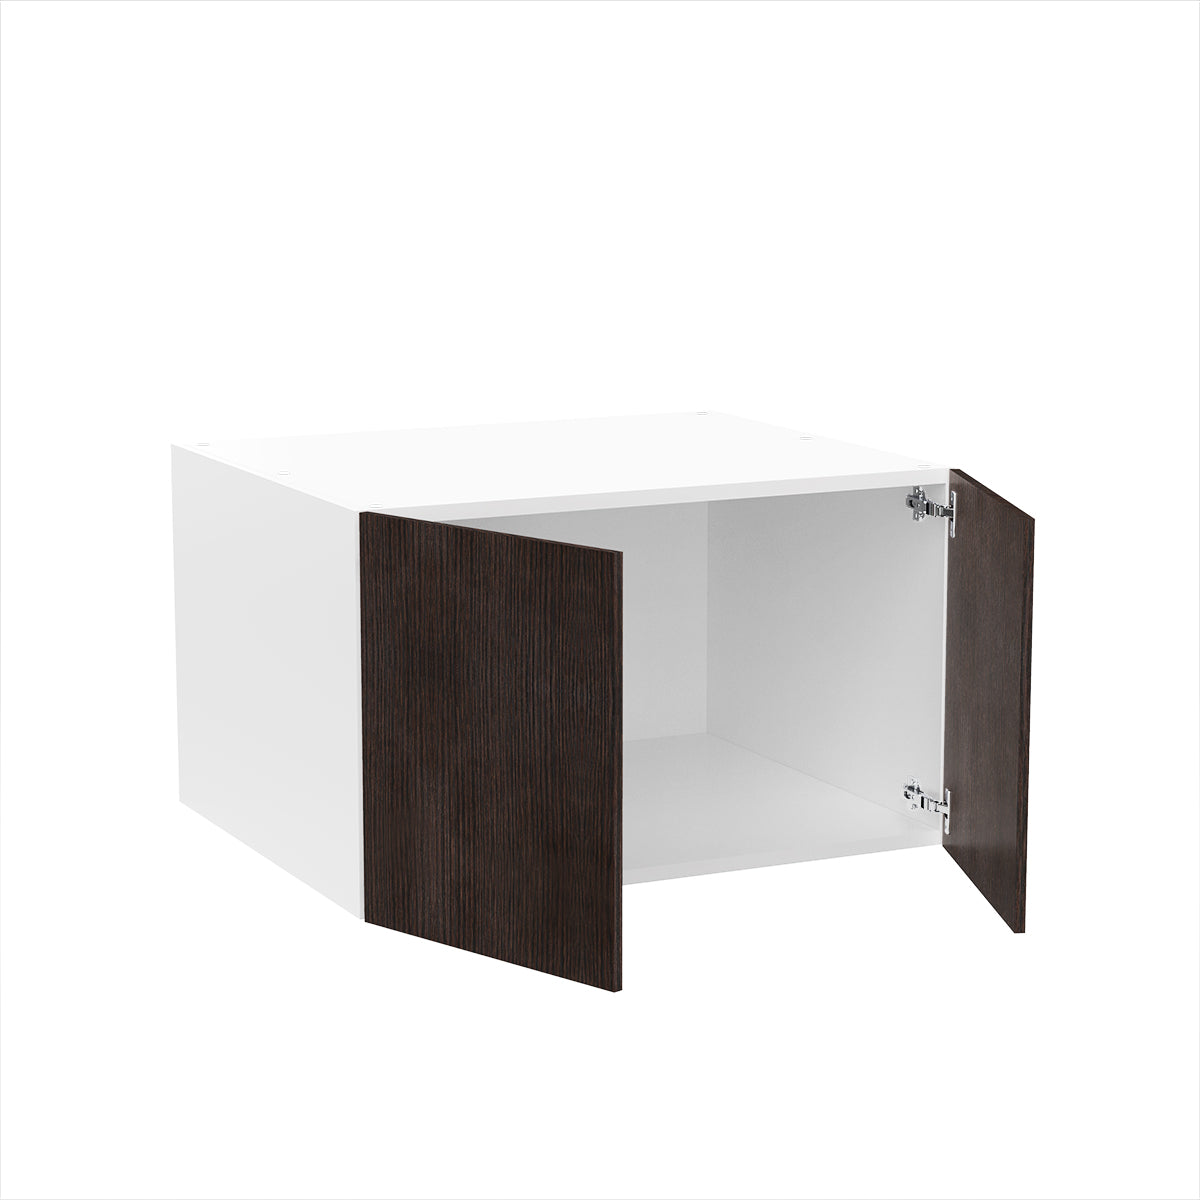 RTA - Brown Oak - Double Door Refrigerator Wall Cabinets | 30"W x 18"H x 24"D